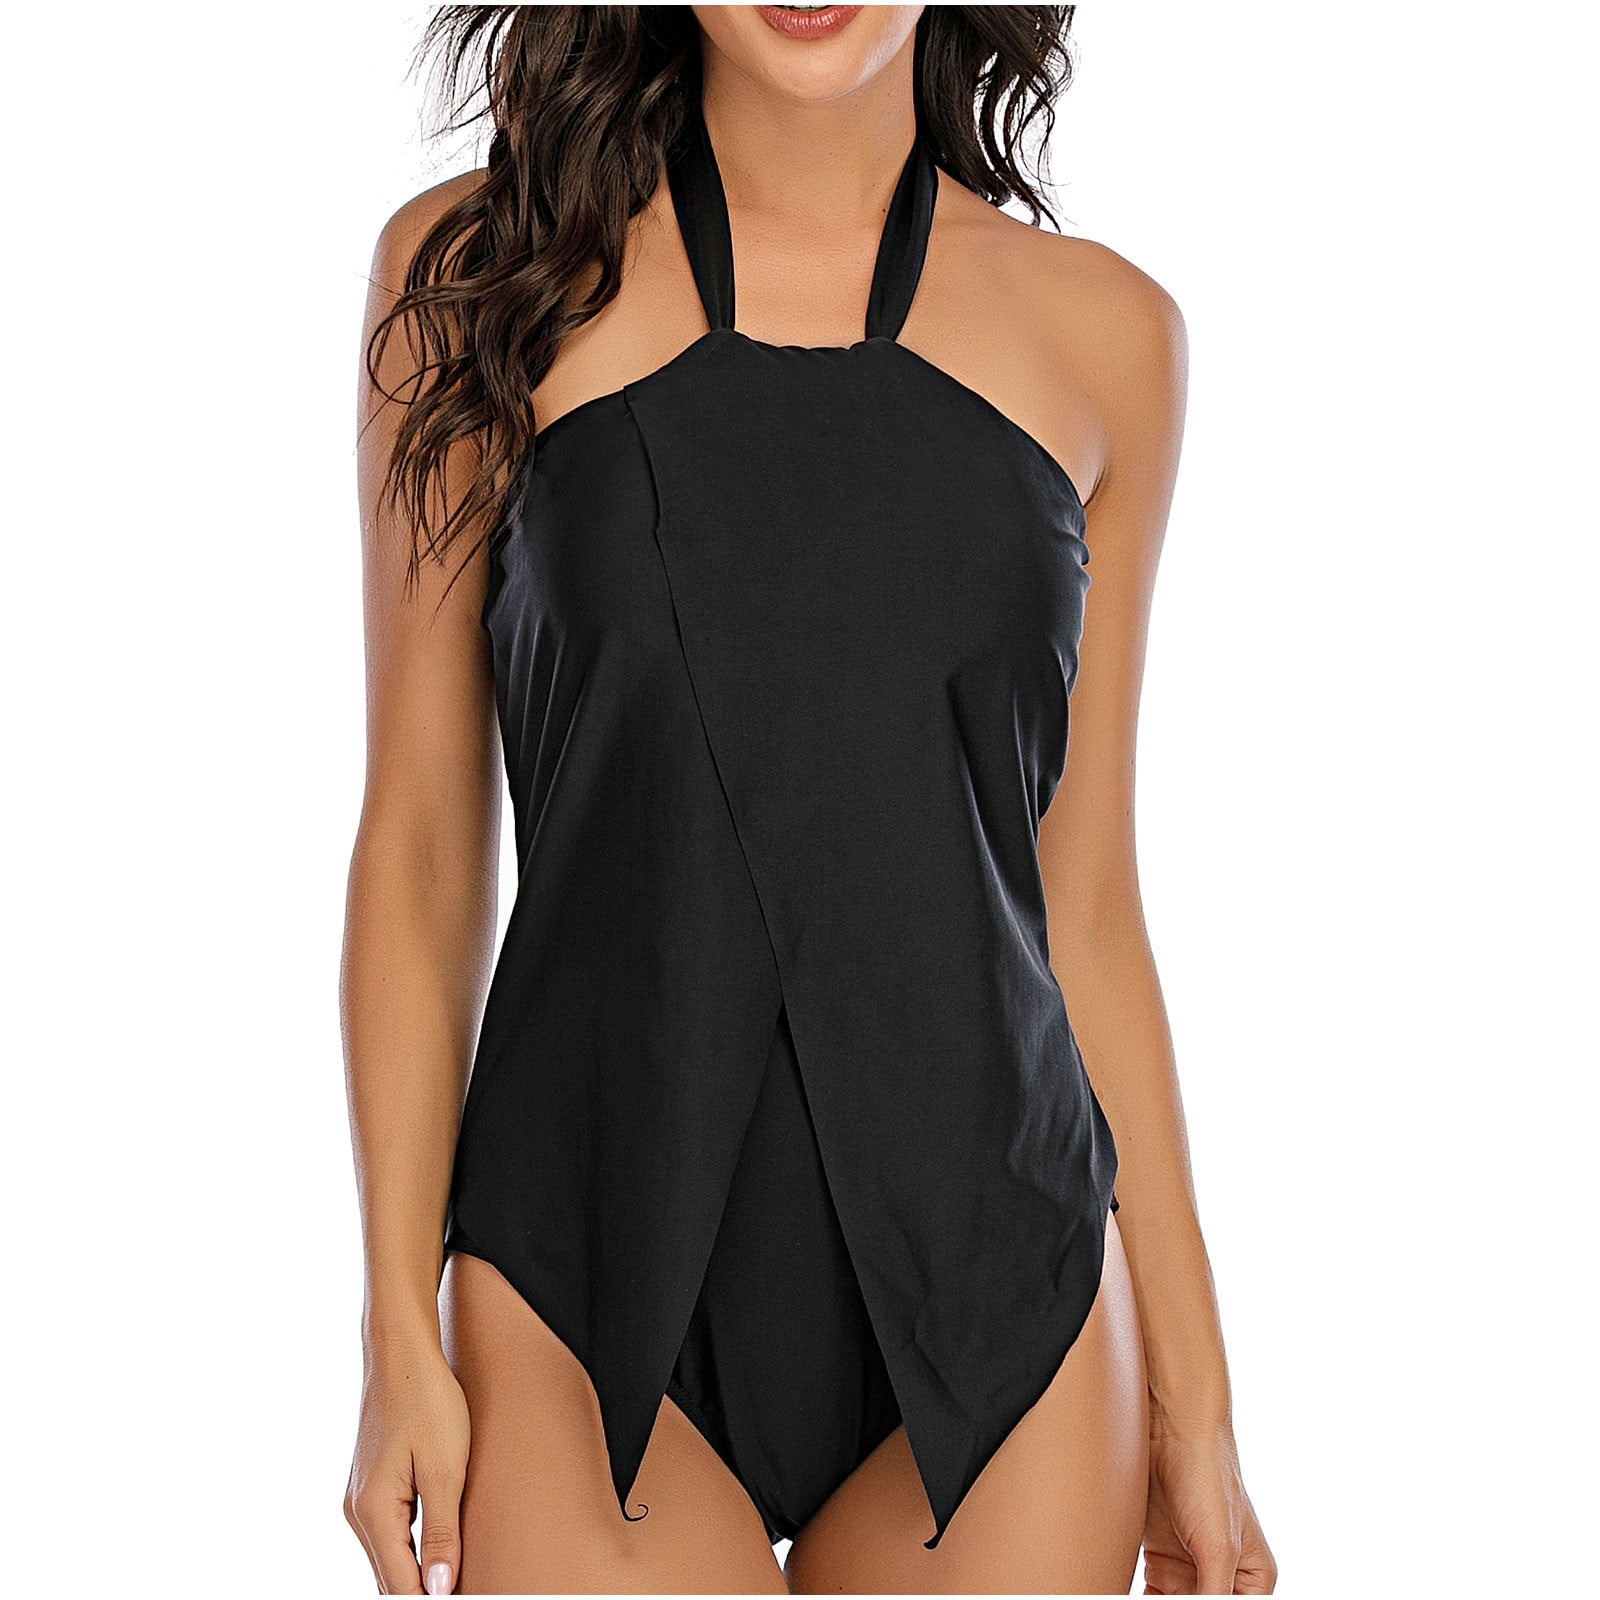 Aofany Large Size Bathing Suit for Women Solid Minimalistic Skirt Style ...